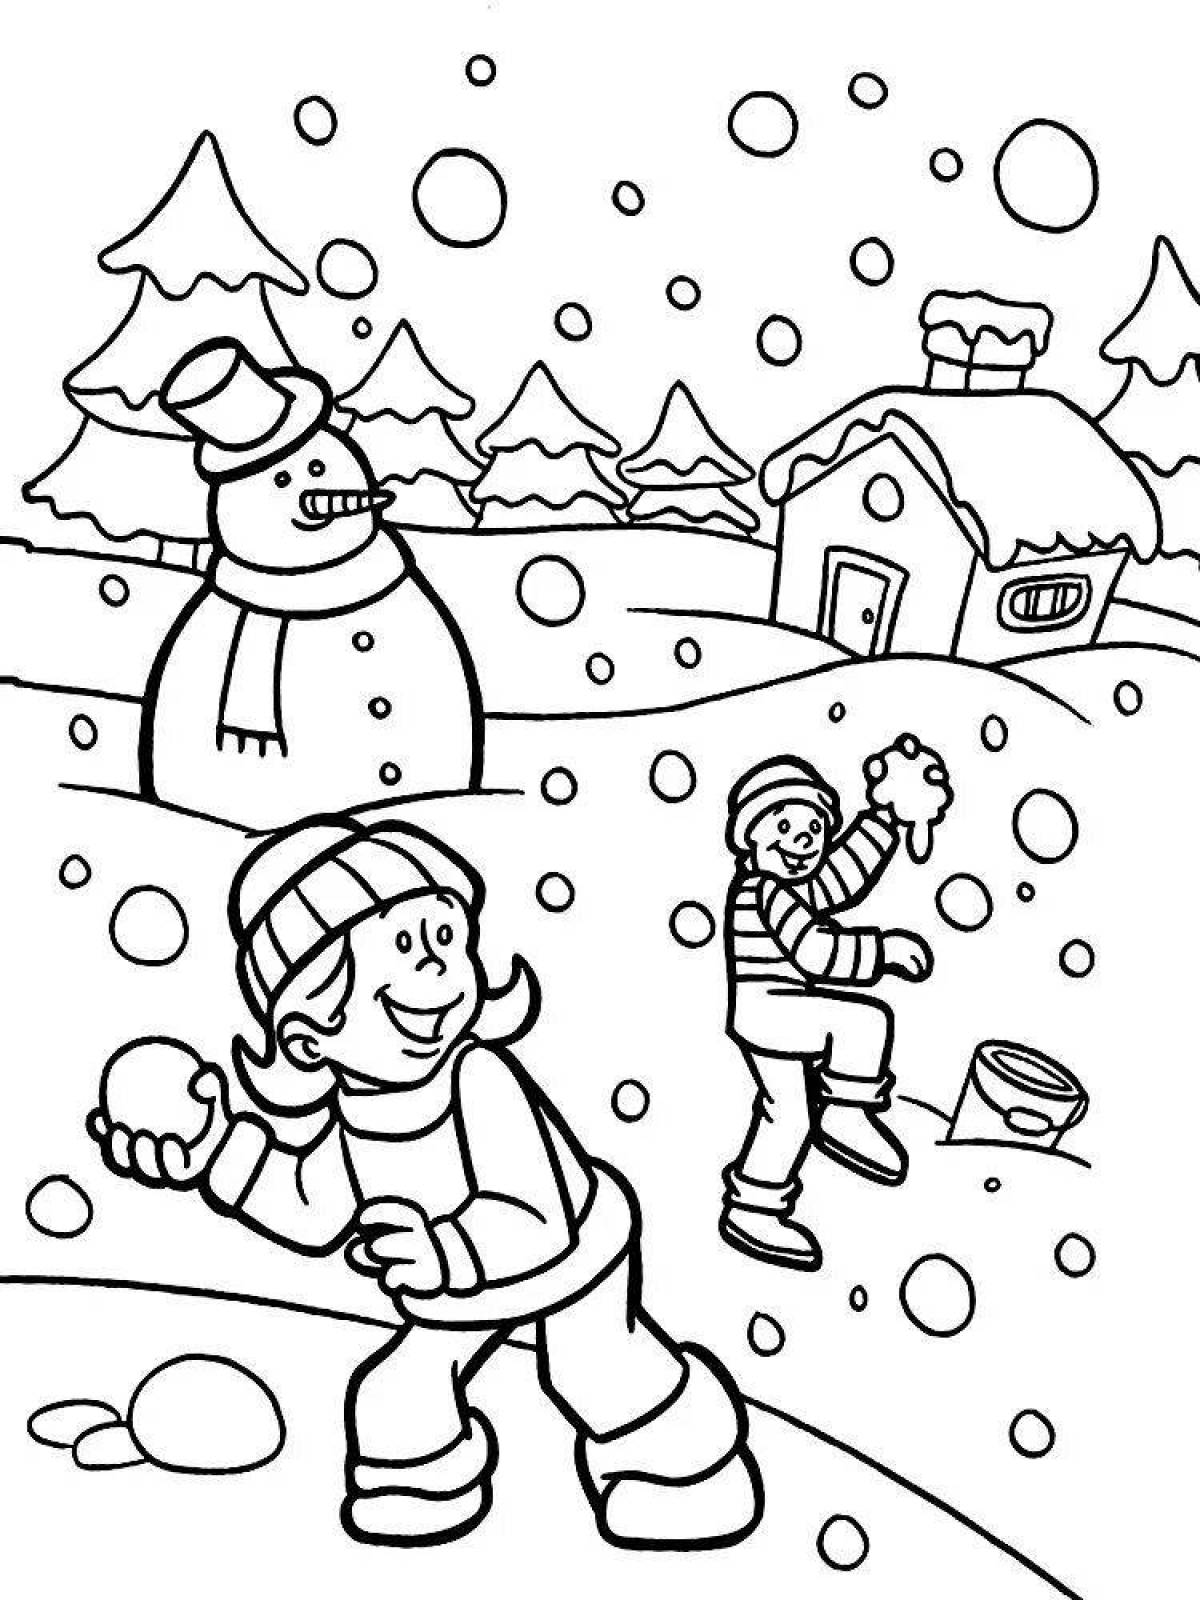 Live children's winter coloring